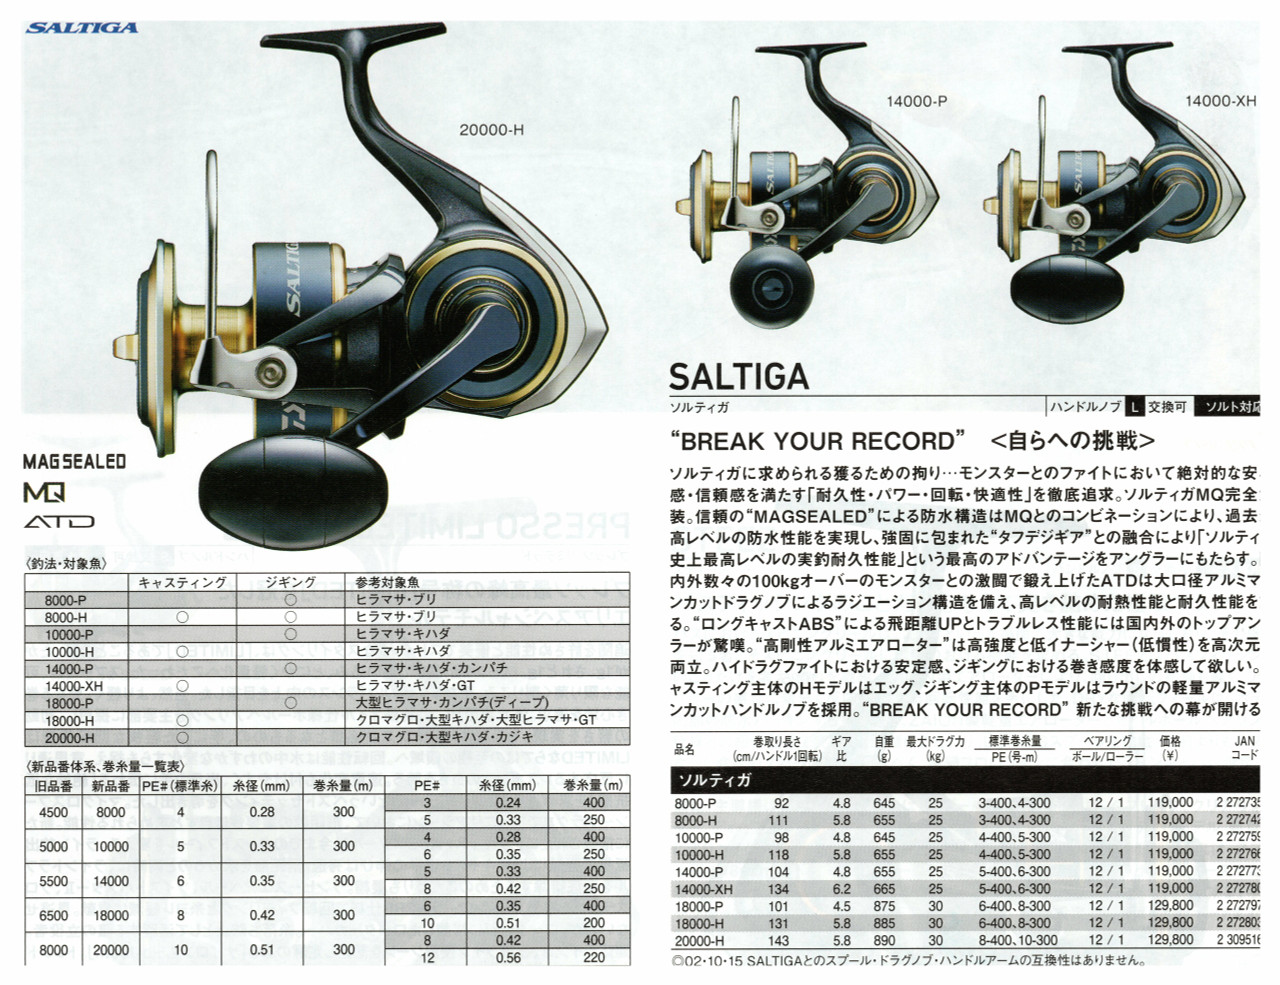 2020 Daiwa Saltiga 14000XH (IN DEPTH) Review 